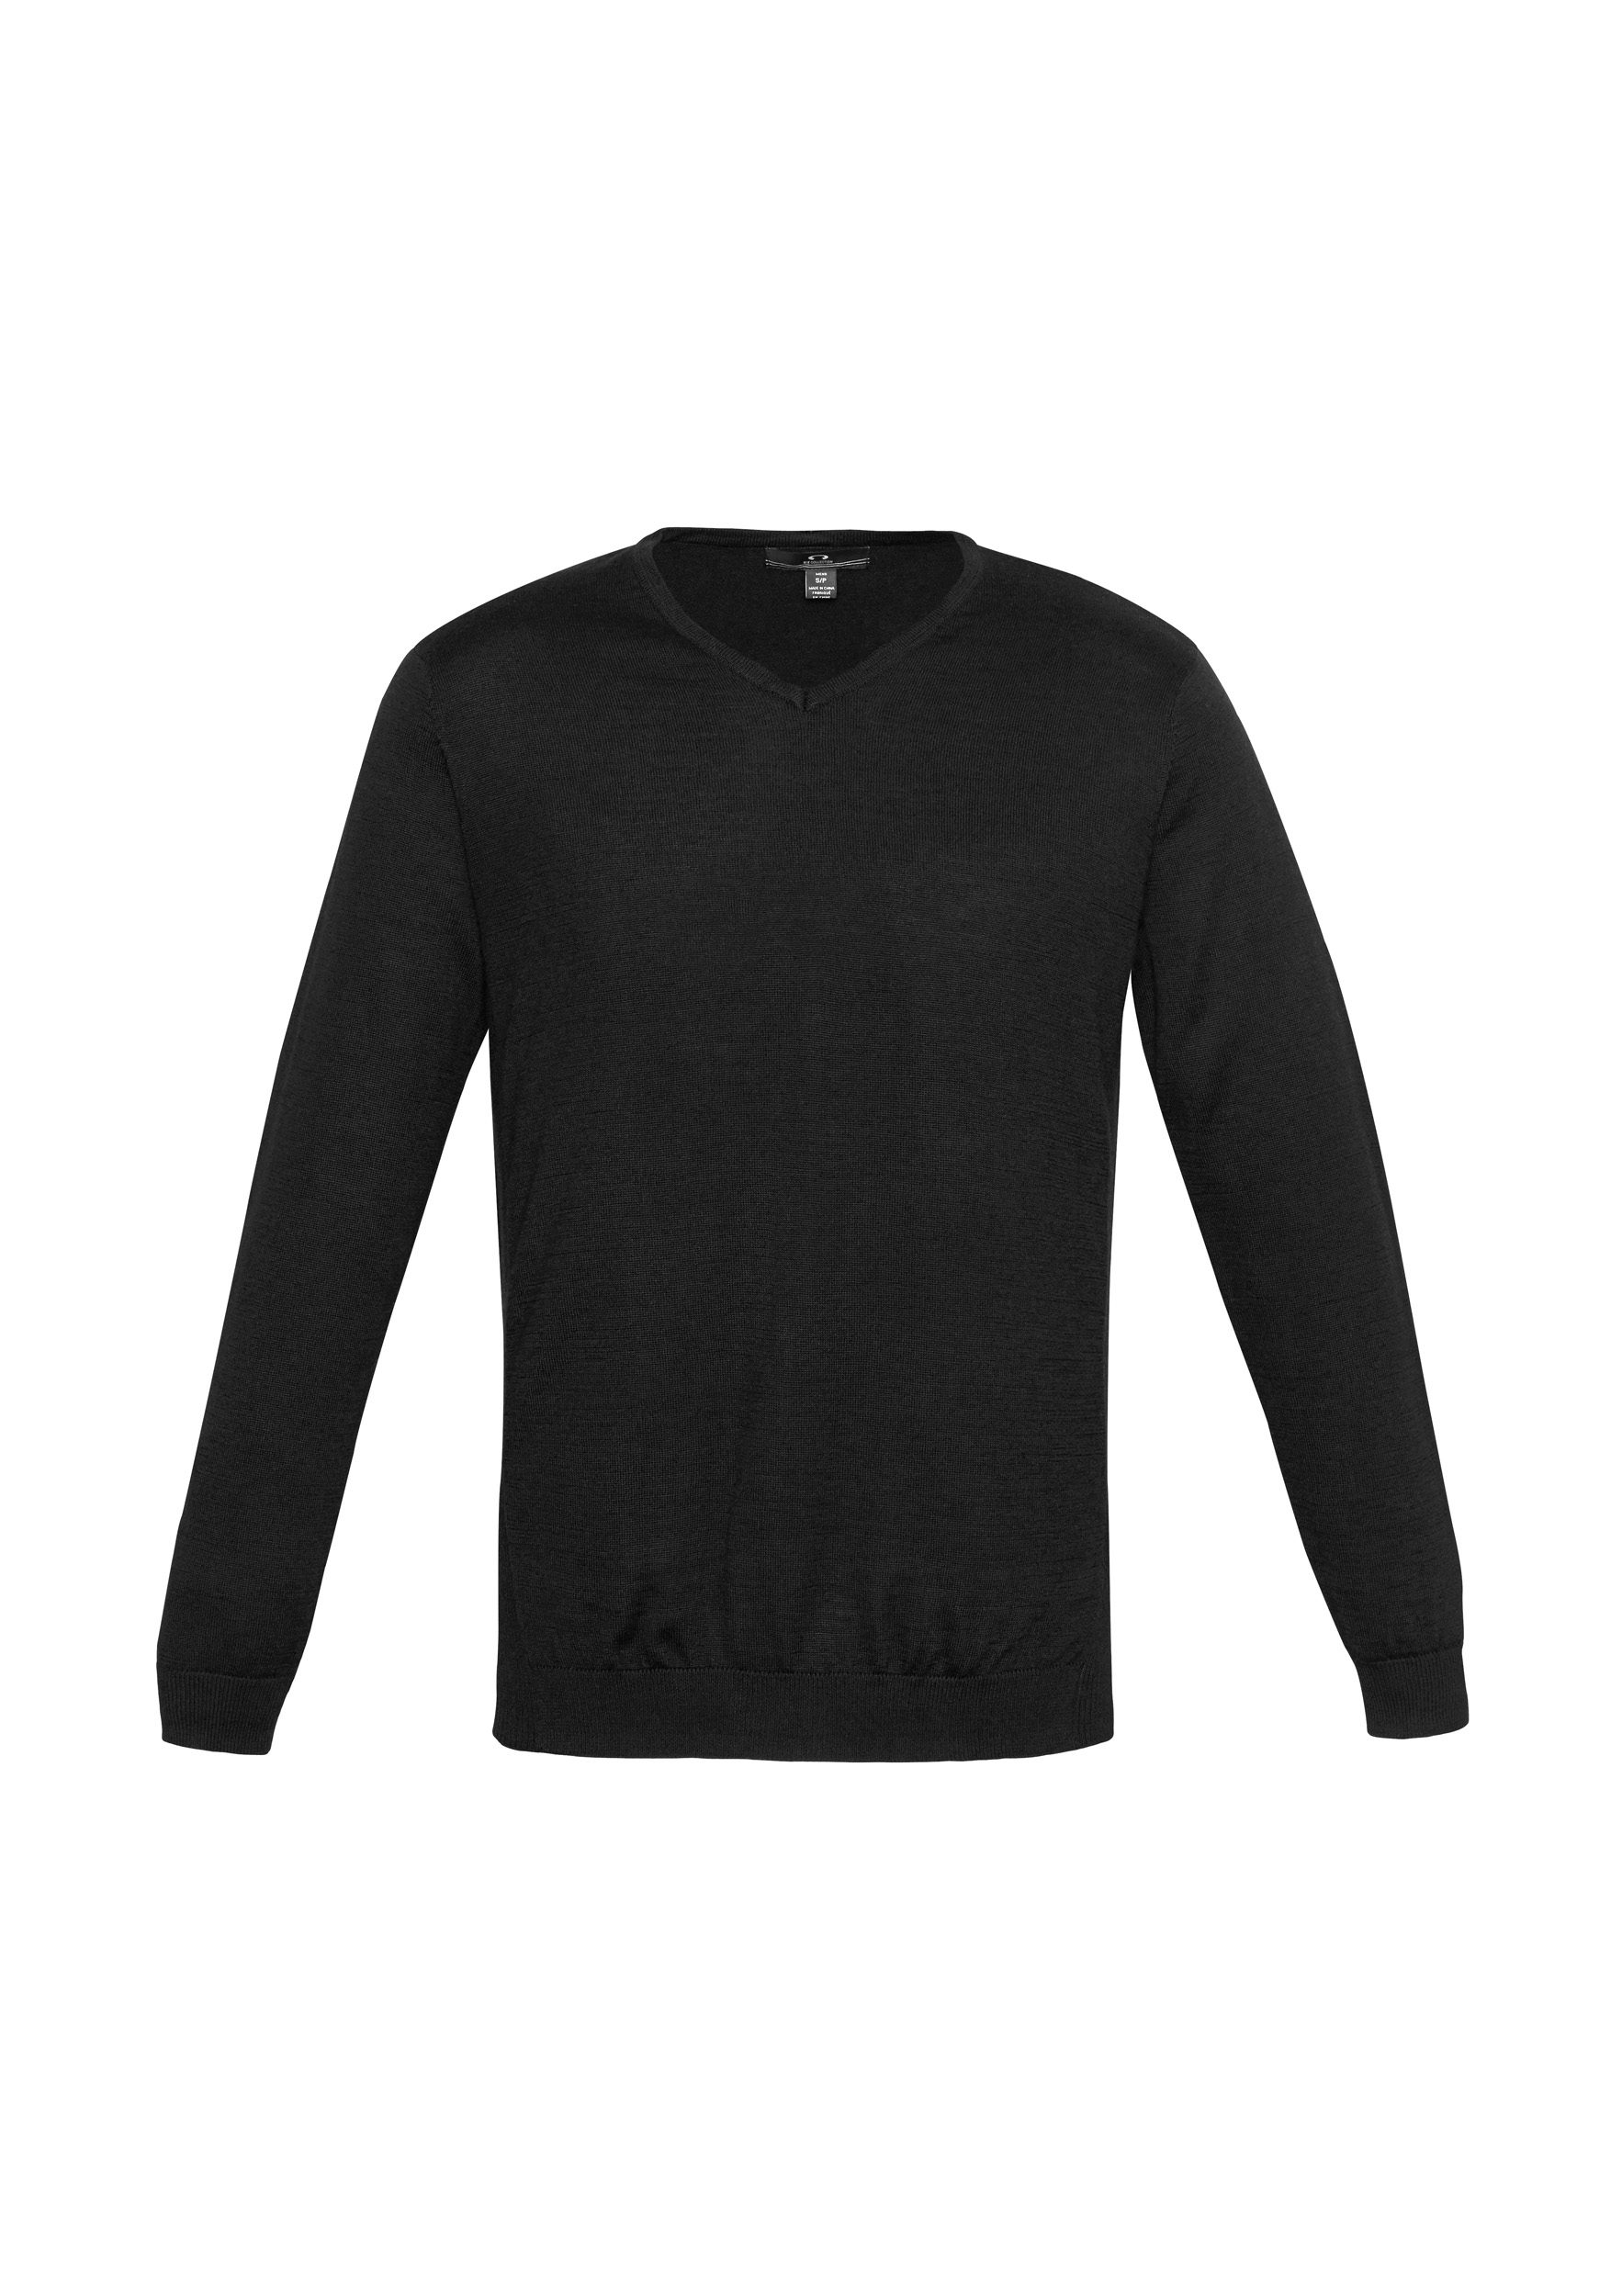 Biz Collection Men's Milano Pullover #WP417M Black